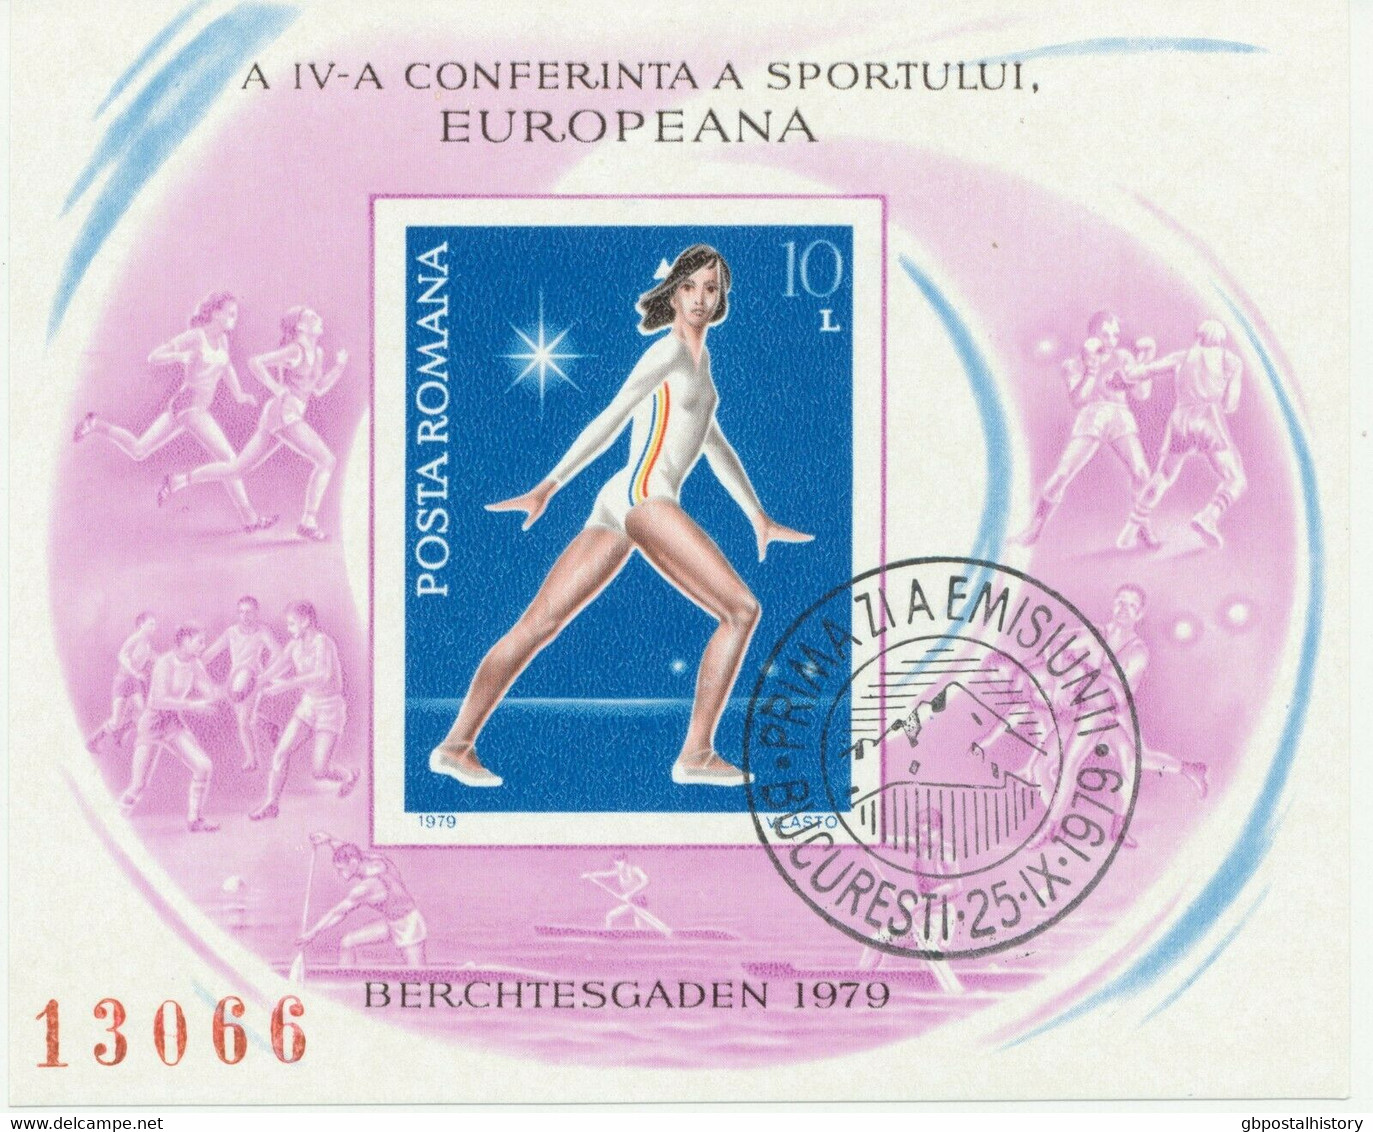 RUMÄNIEN 1979 VFU Block 10 L 4.Europäischer Sportkonferenz Berchtesgaden ABARTEN - Variedades Y Curiosidades